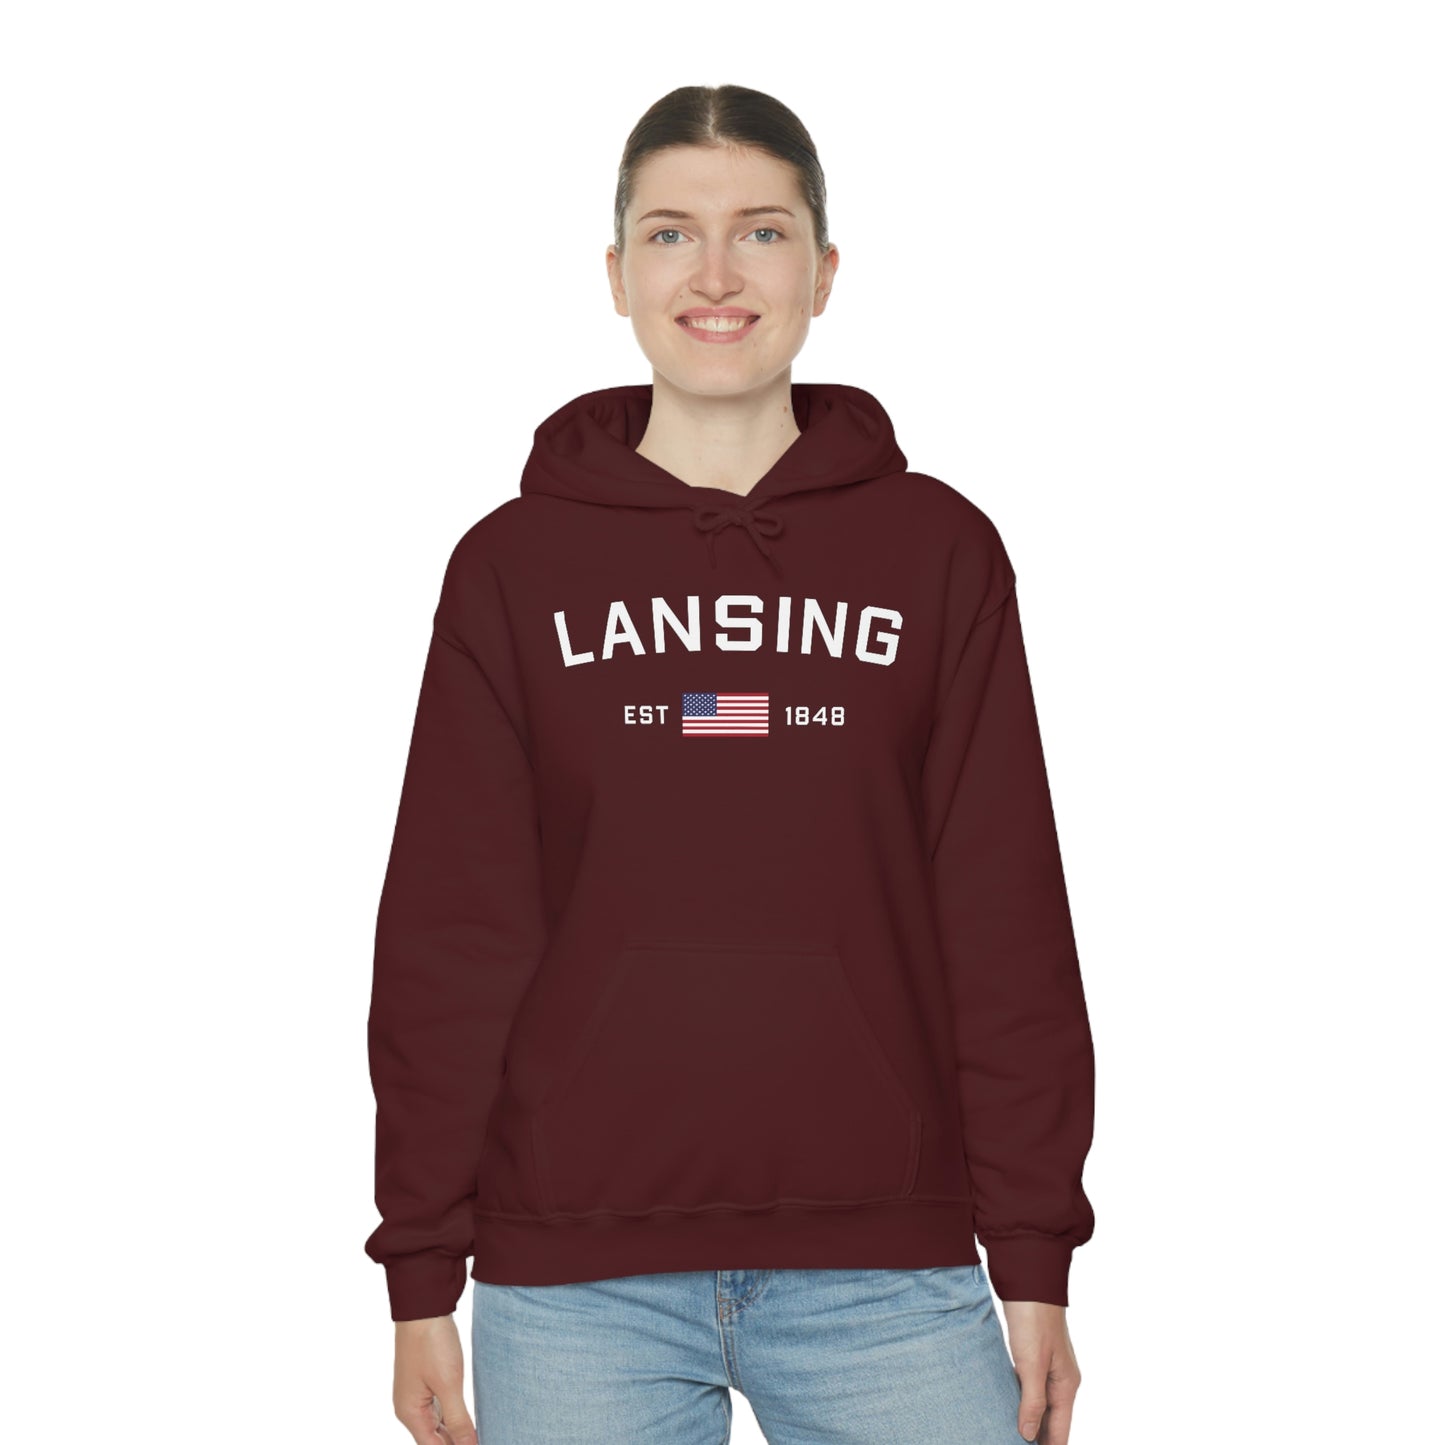 'Lansing EST 1848' Hoodie (w/USA Flag Outline) | Unisex Standard